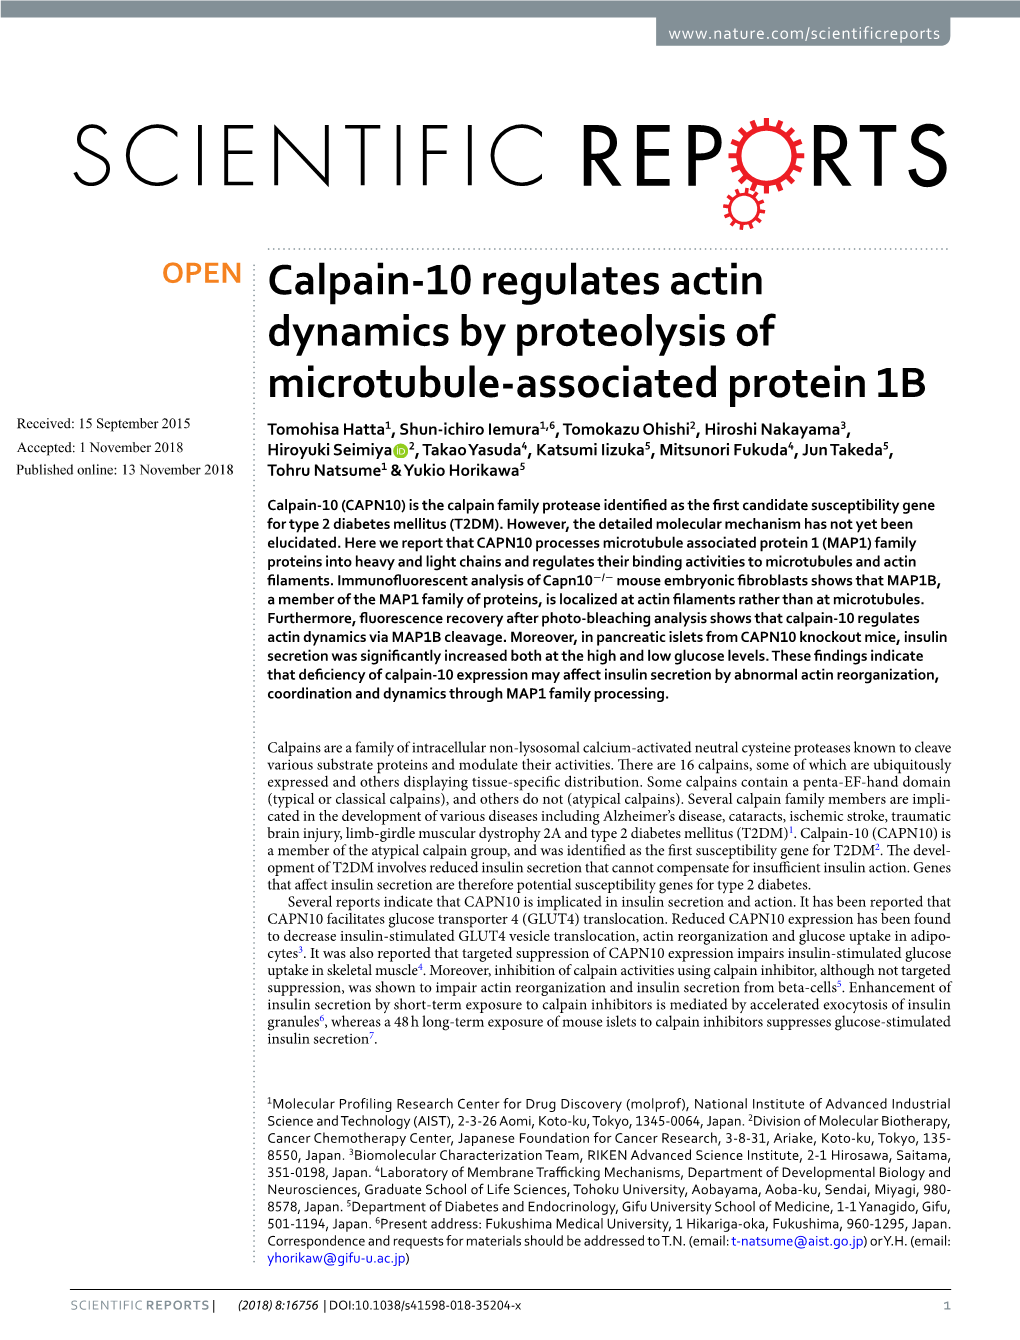 Calpain-10 Regulates Actin Dynamics by Proteolysis of Microtubule-Associated Protein 1B